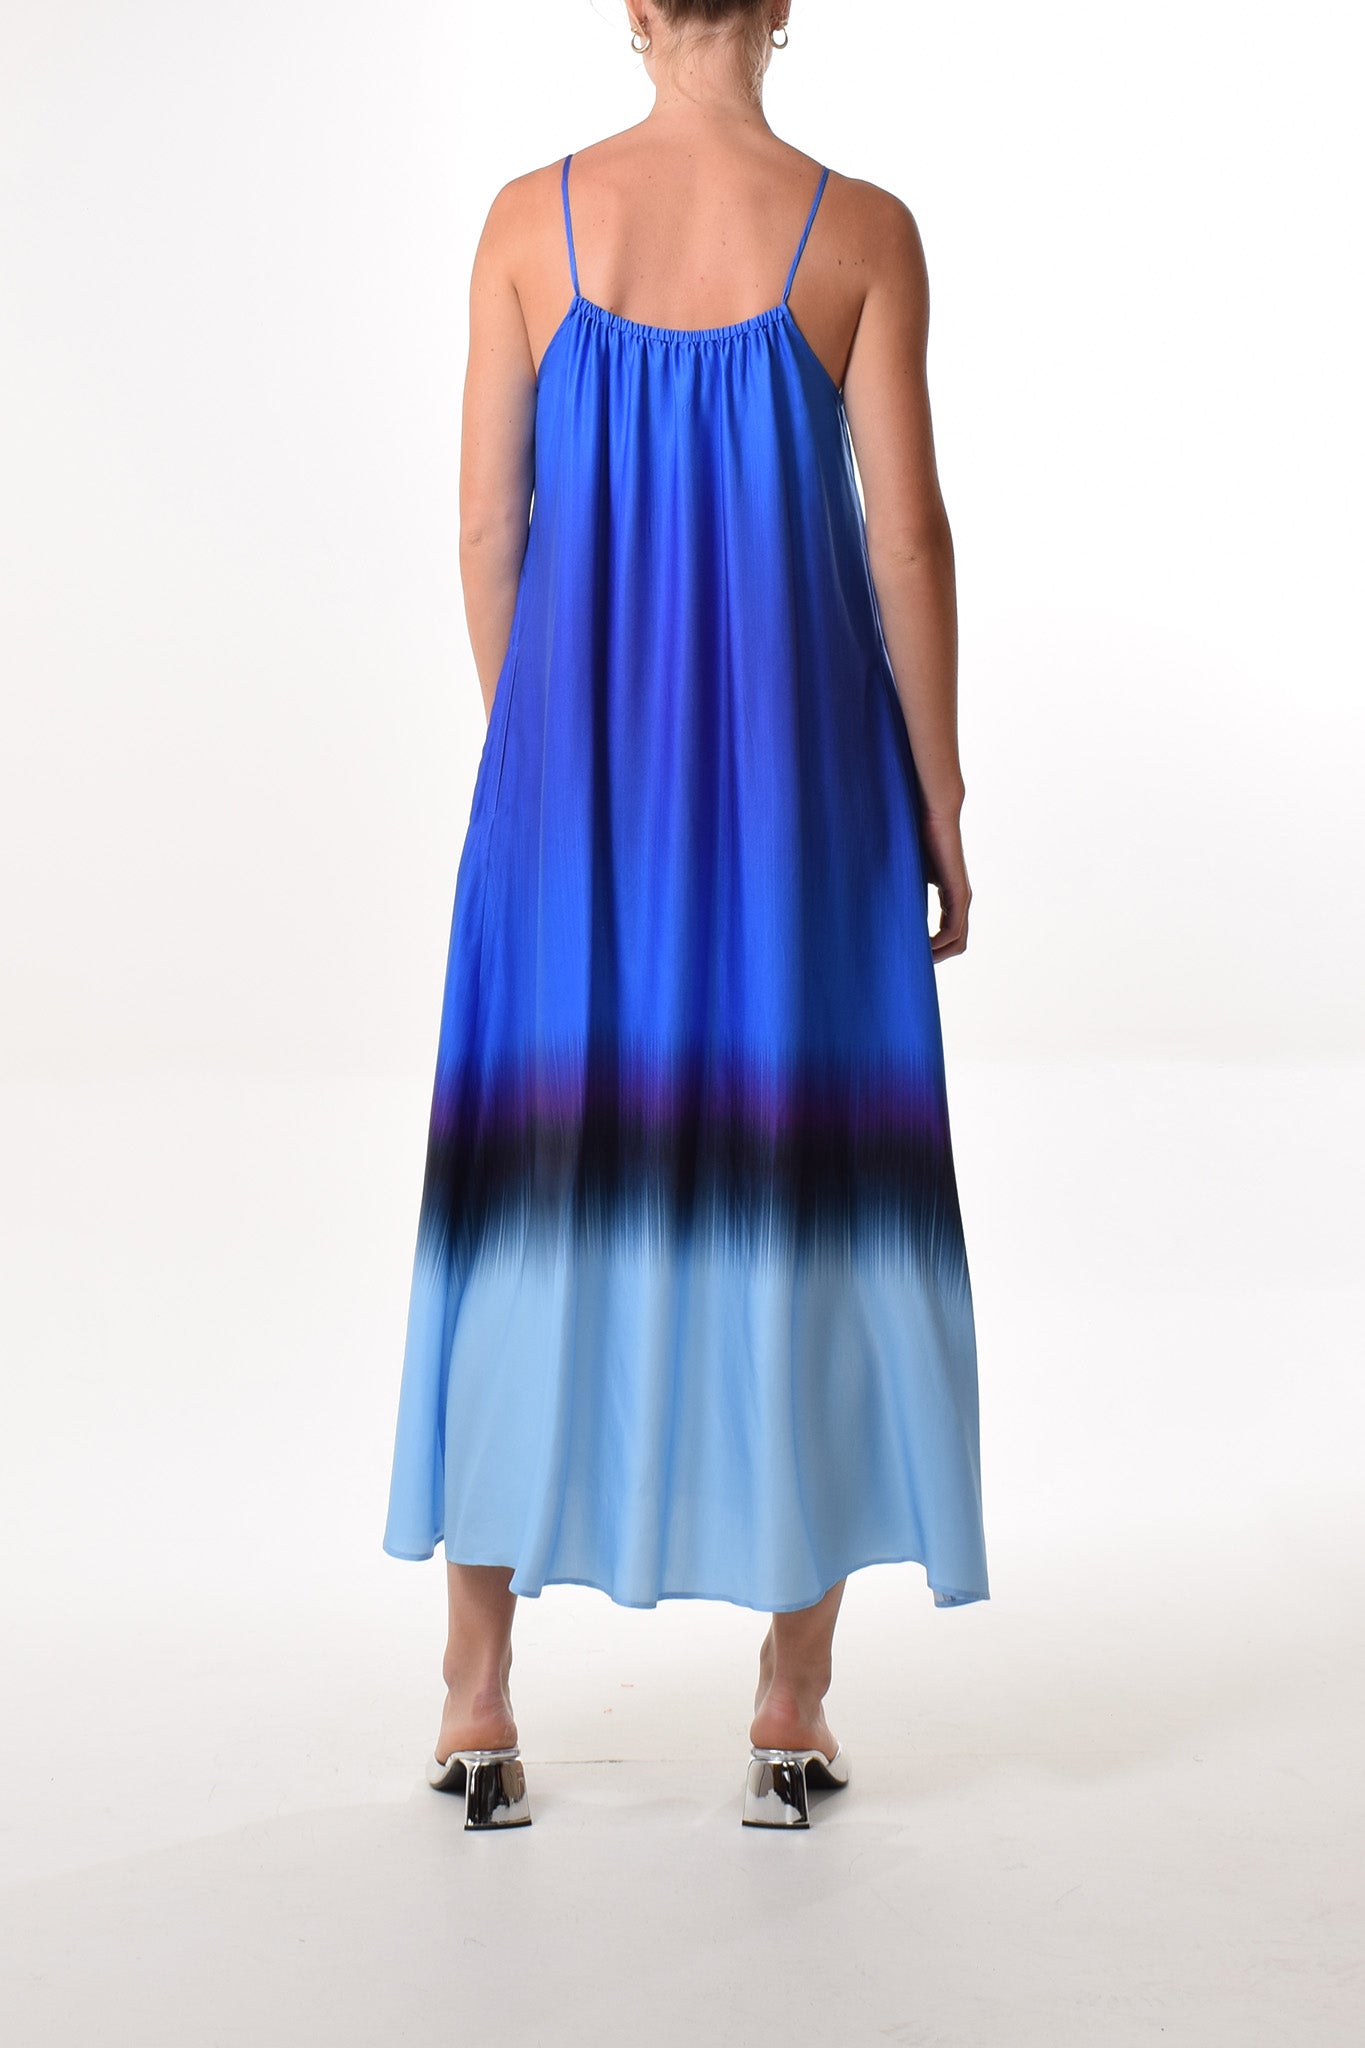 Tivoli dress in Bleu (Lecil print)